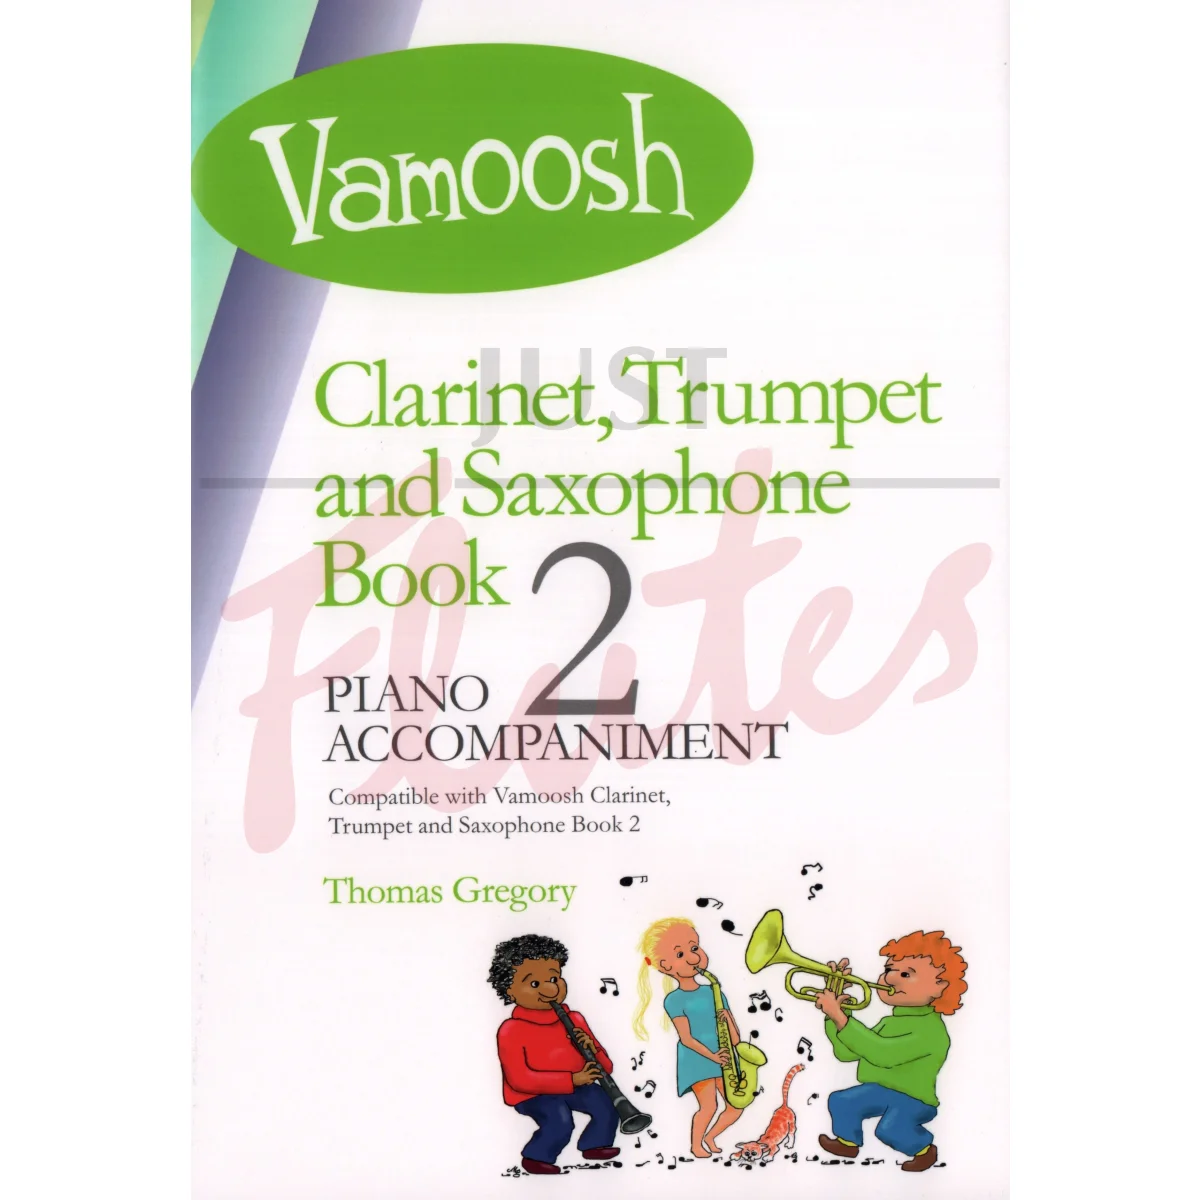 Vamoosh Clarinet/Trumpet/Saxophone Book 2 Piano Accompaniment